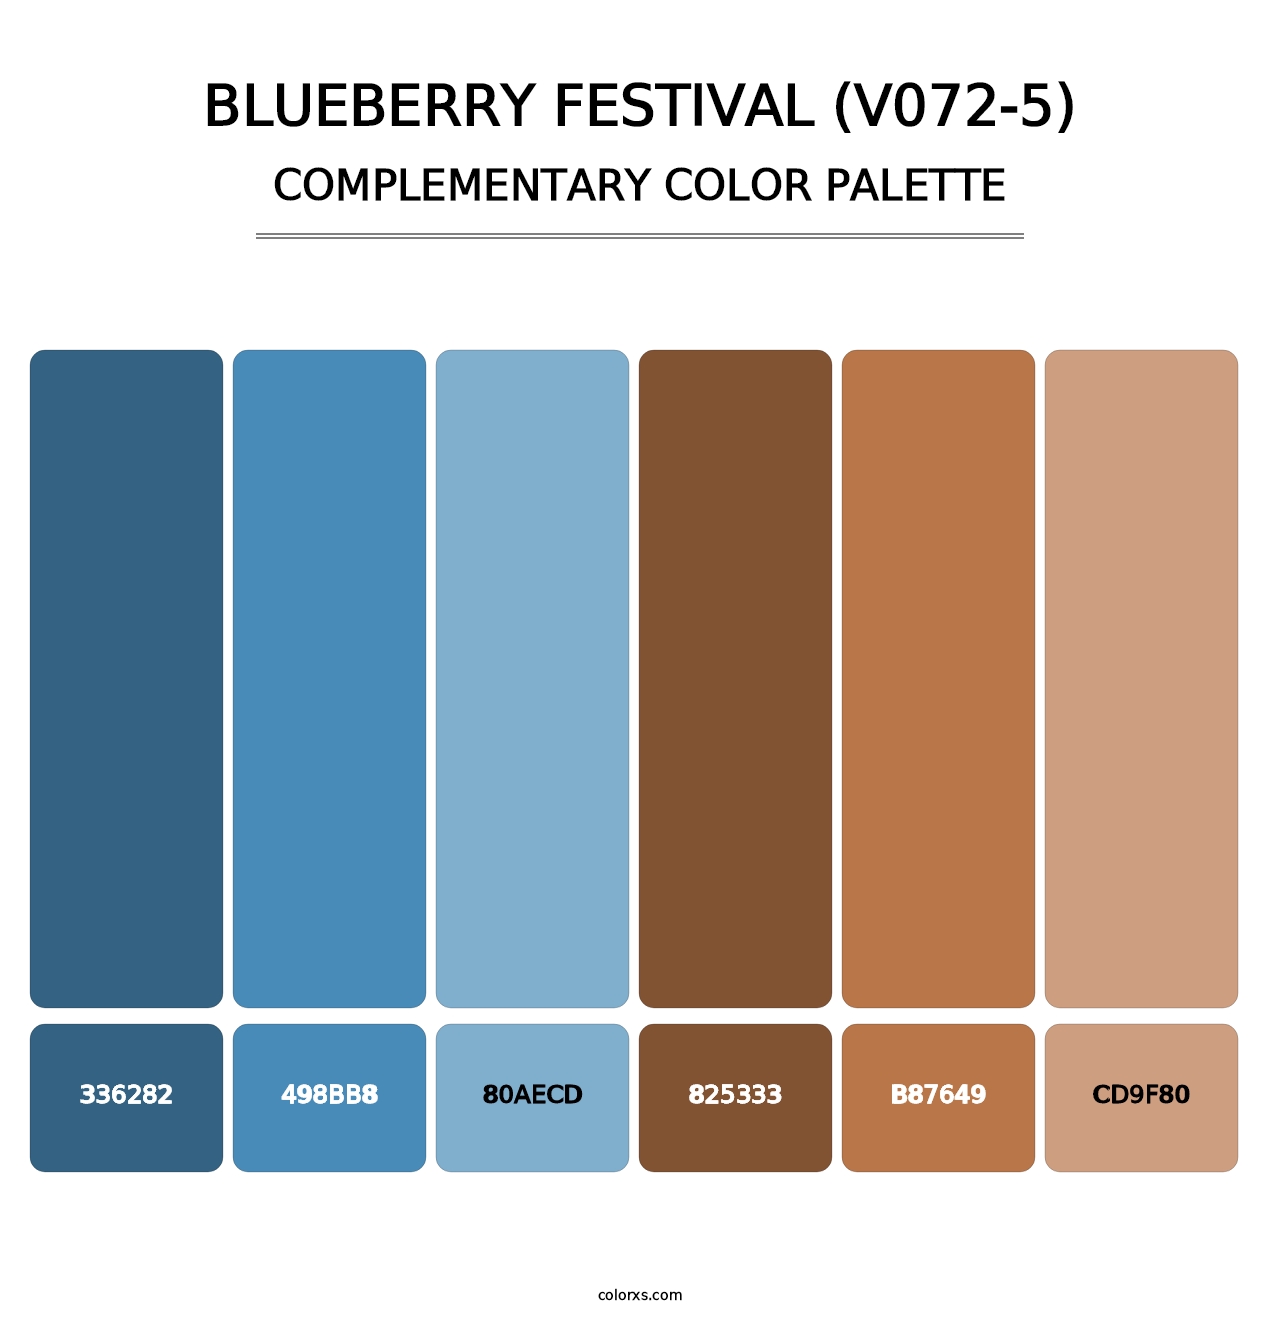 Blueberry Festival (V072-5) - Complementary Color Palette